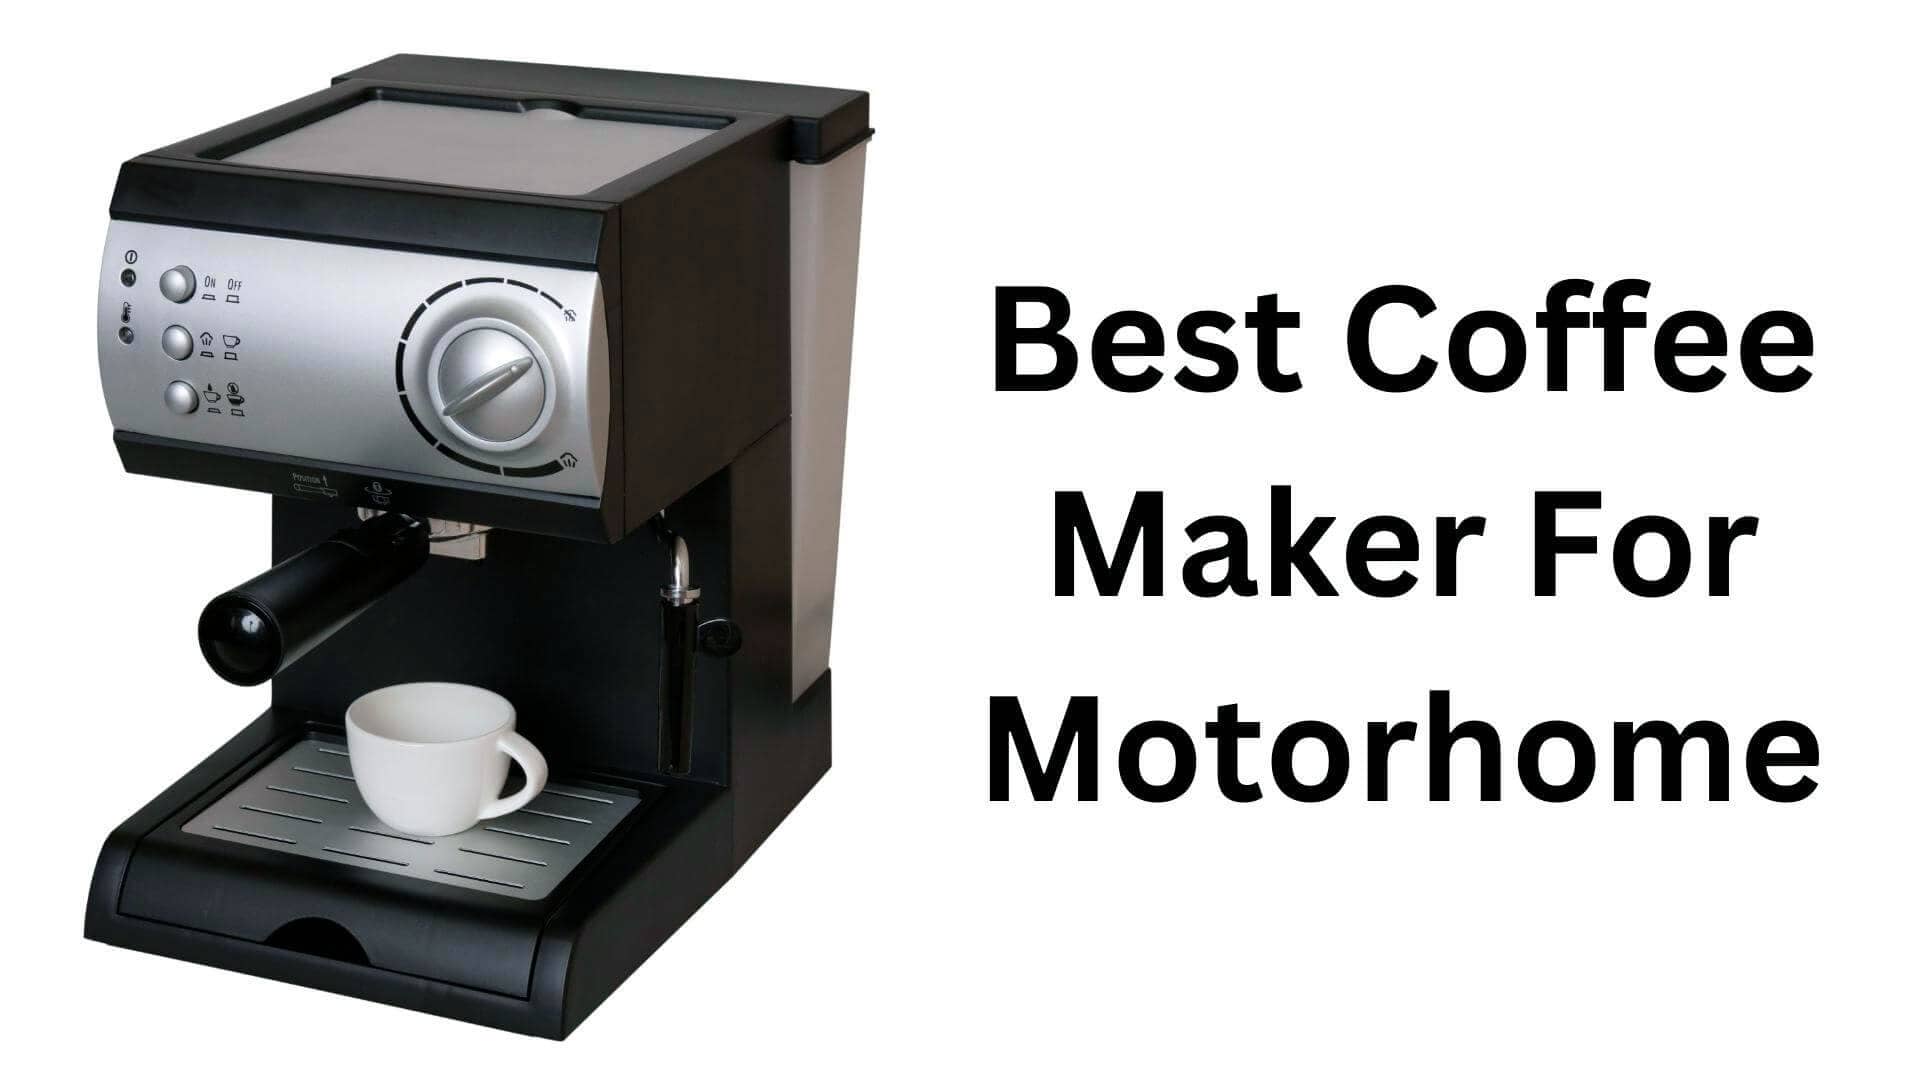 Best Coffee Maker for Motorhome